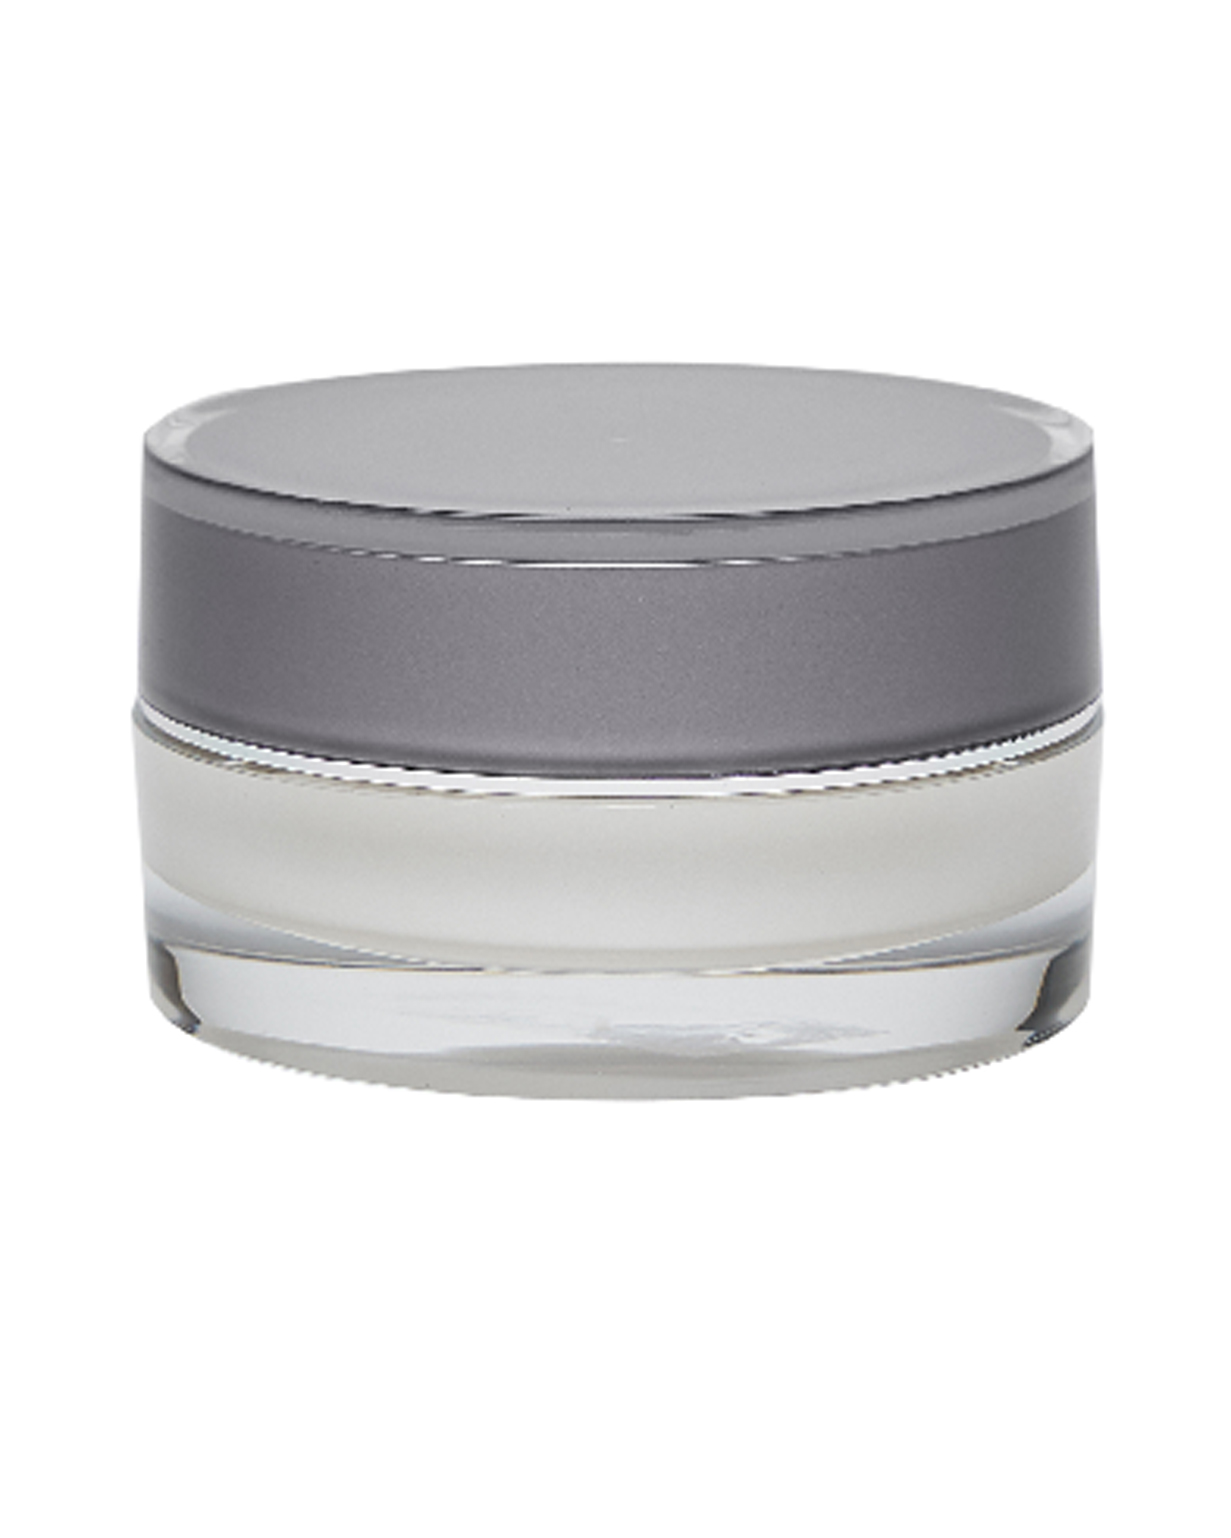 Clear acrylic jar with silver lid